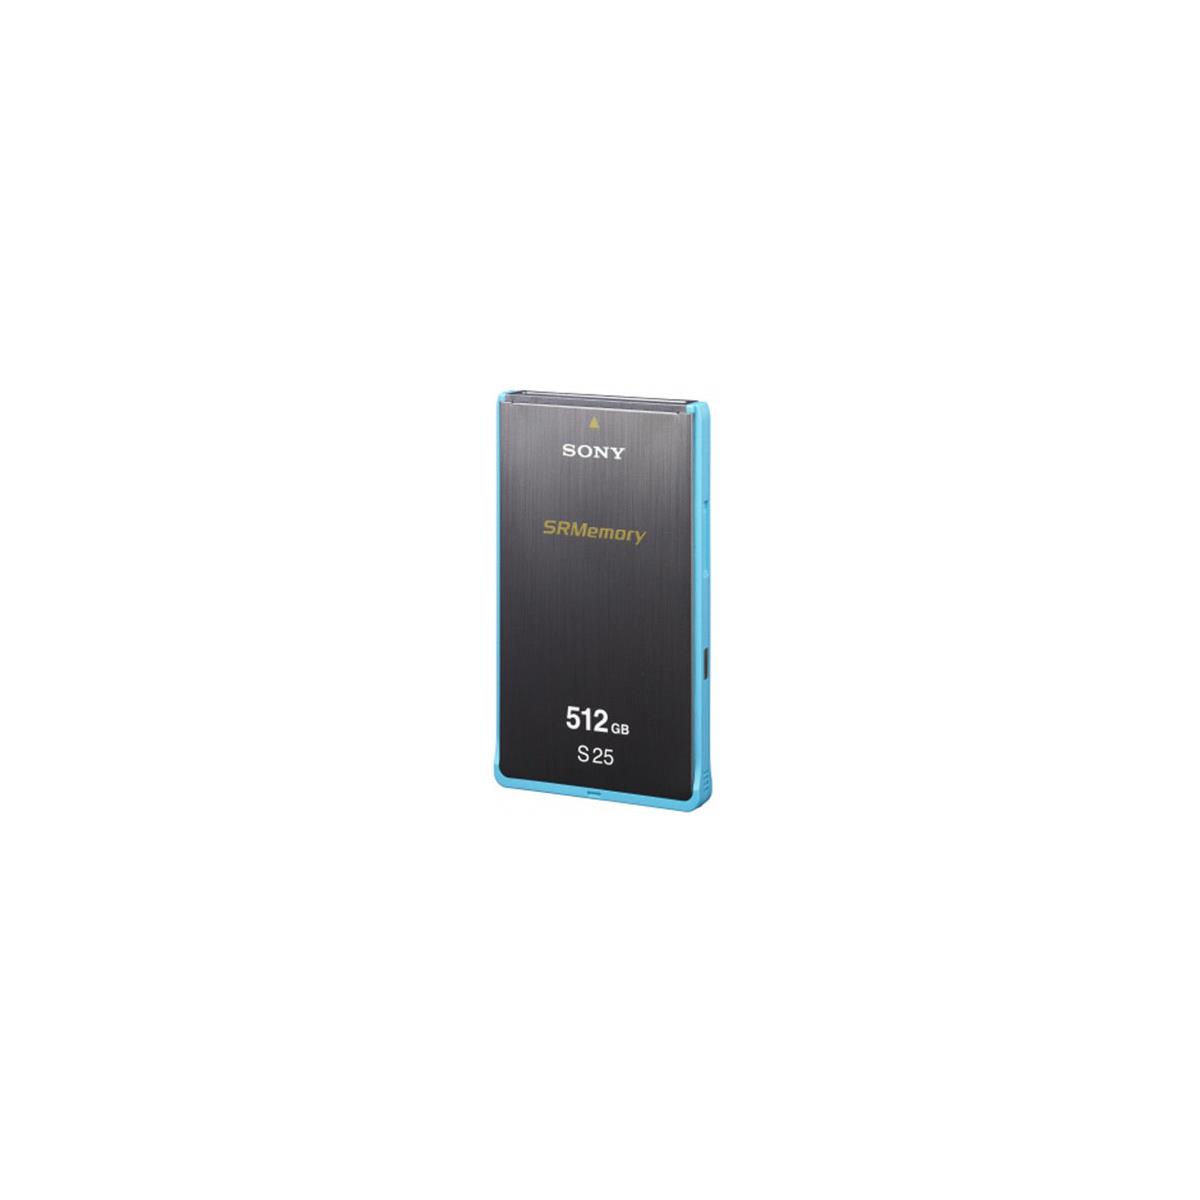 Image of Sony 512GB S25 Series SRMemory Card Memory Card